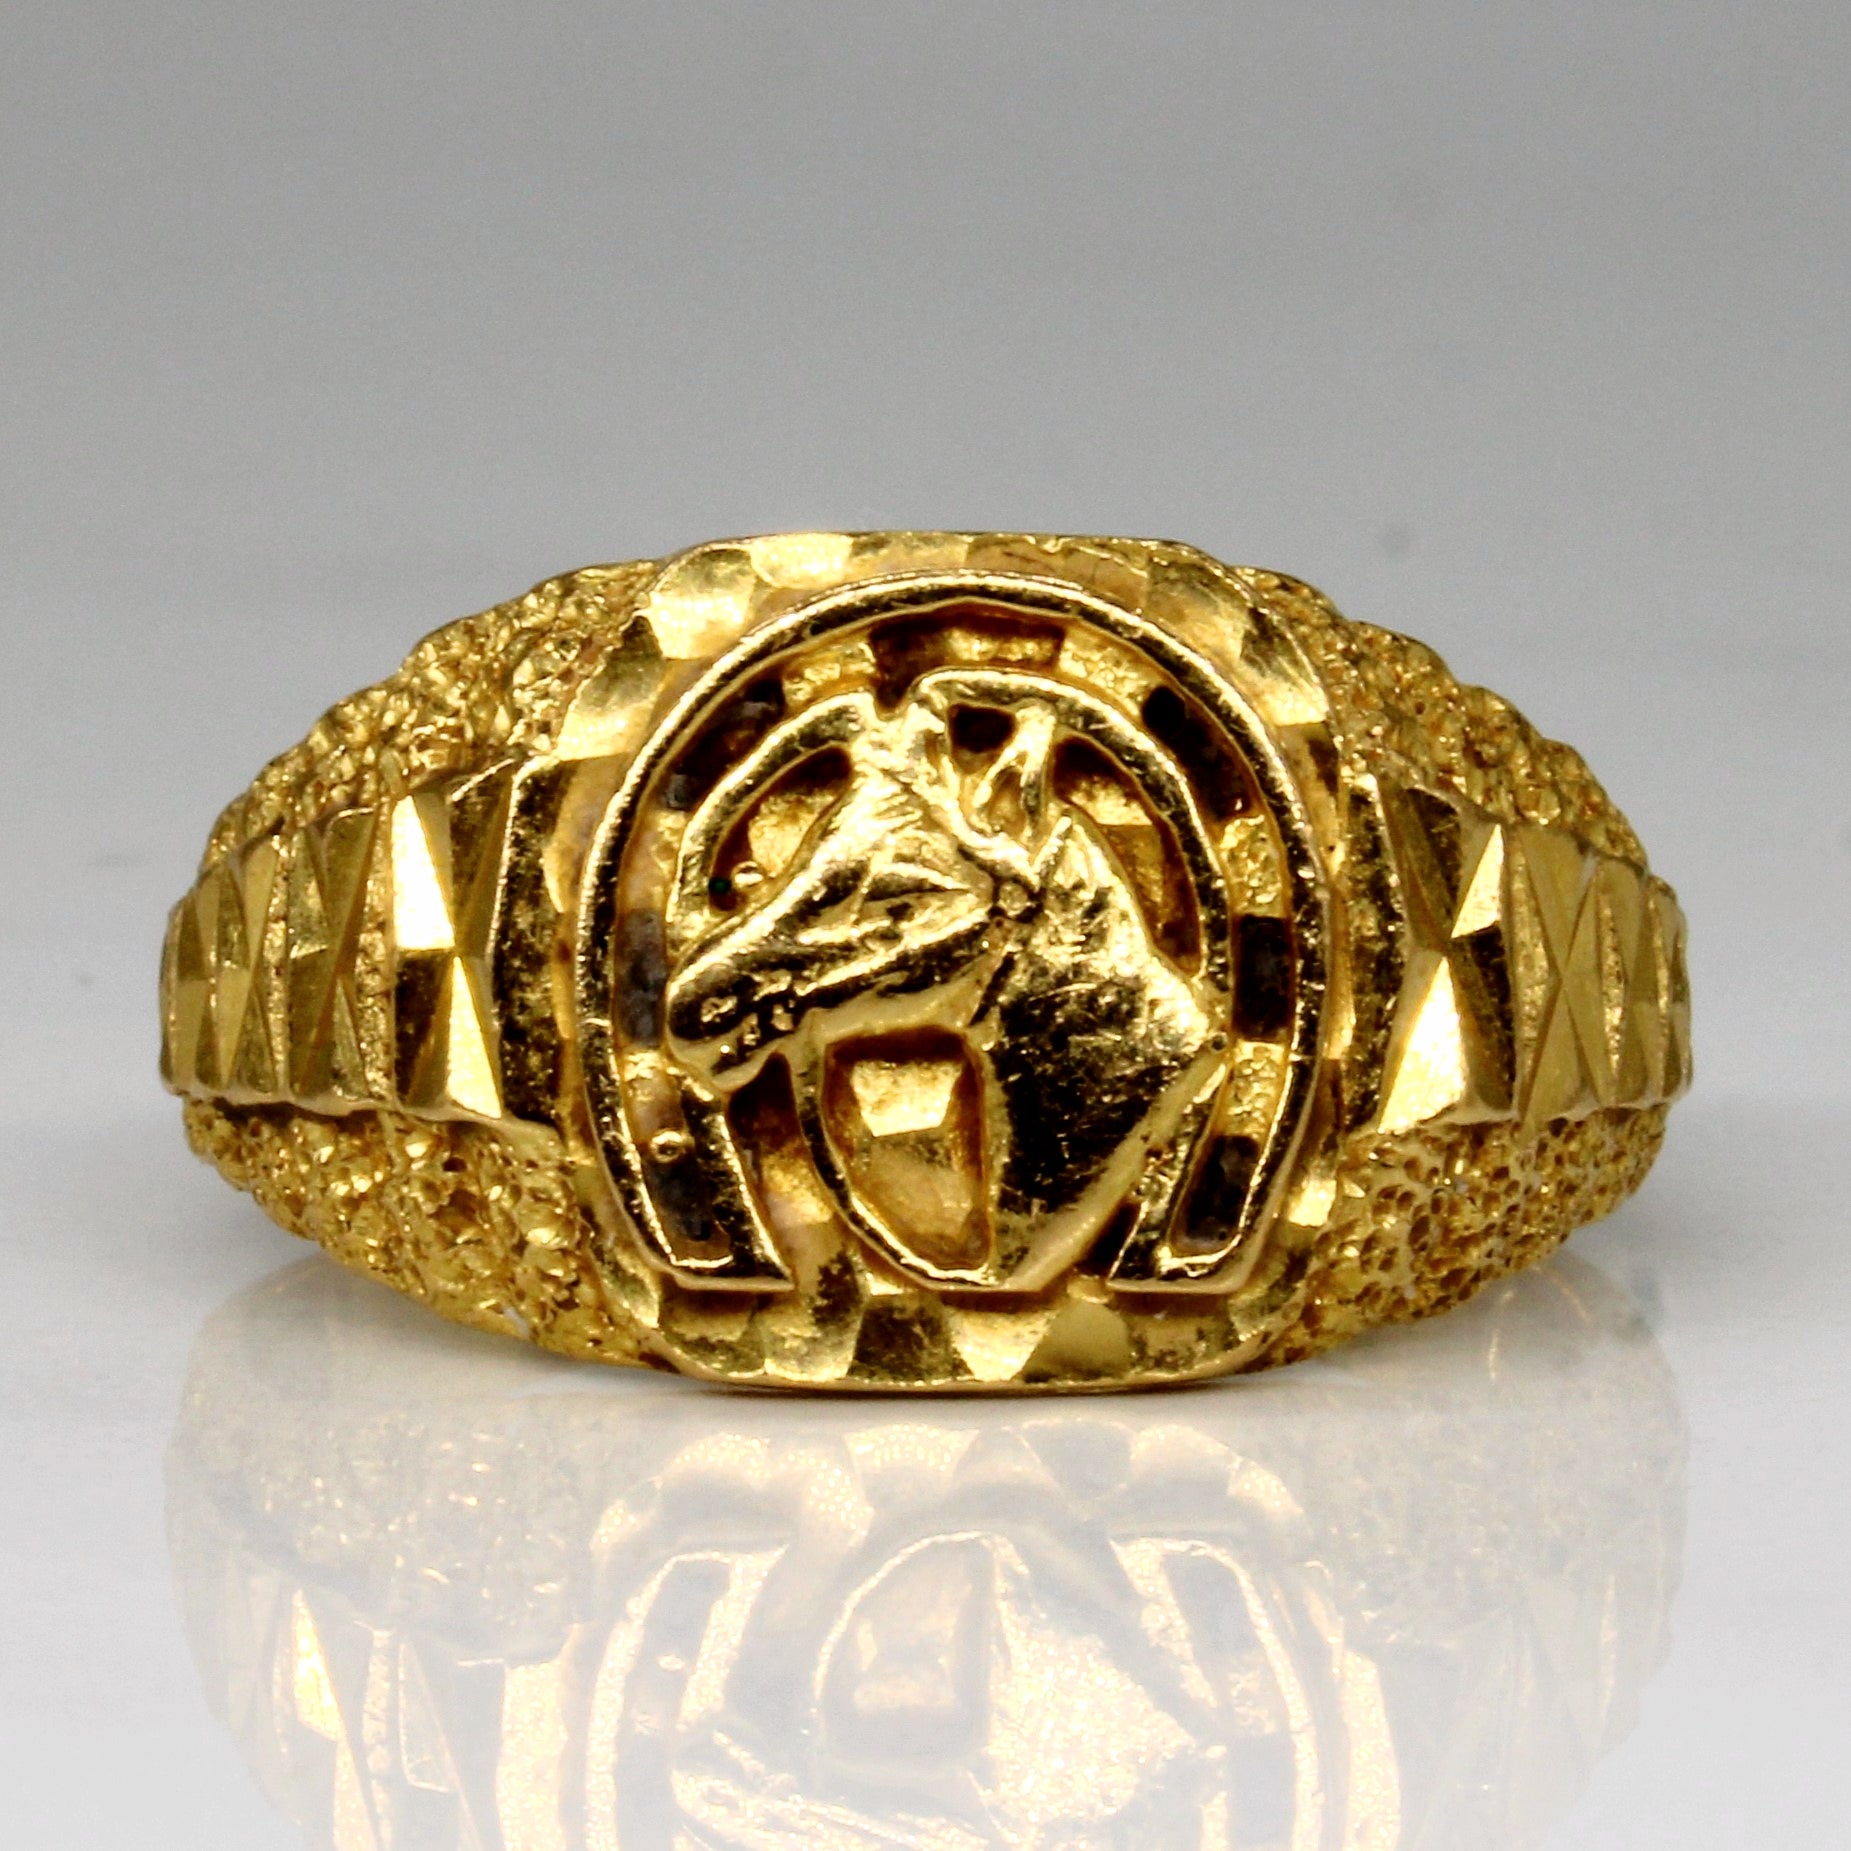 22k Yellow Gold Horse Ring | SZ 9 |